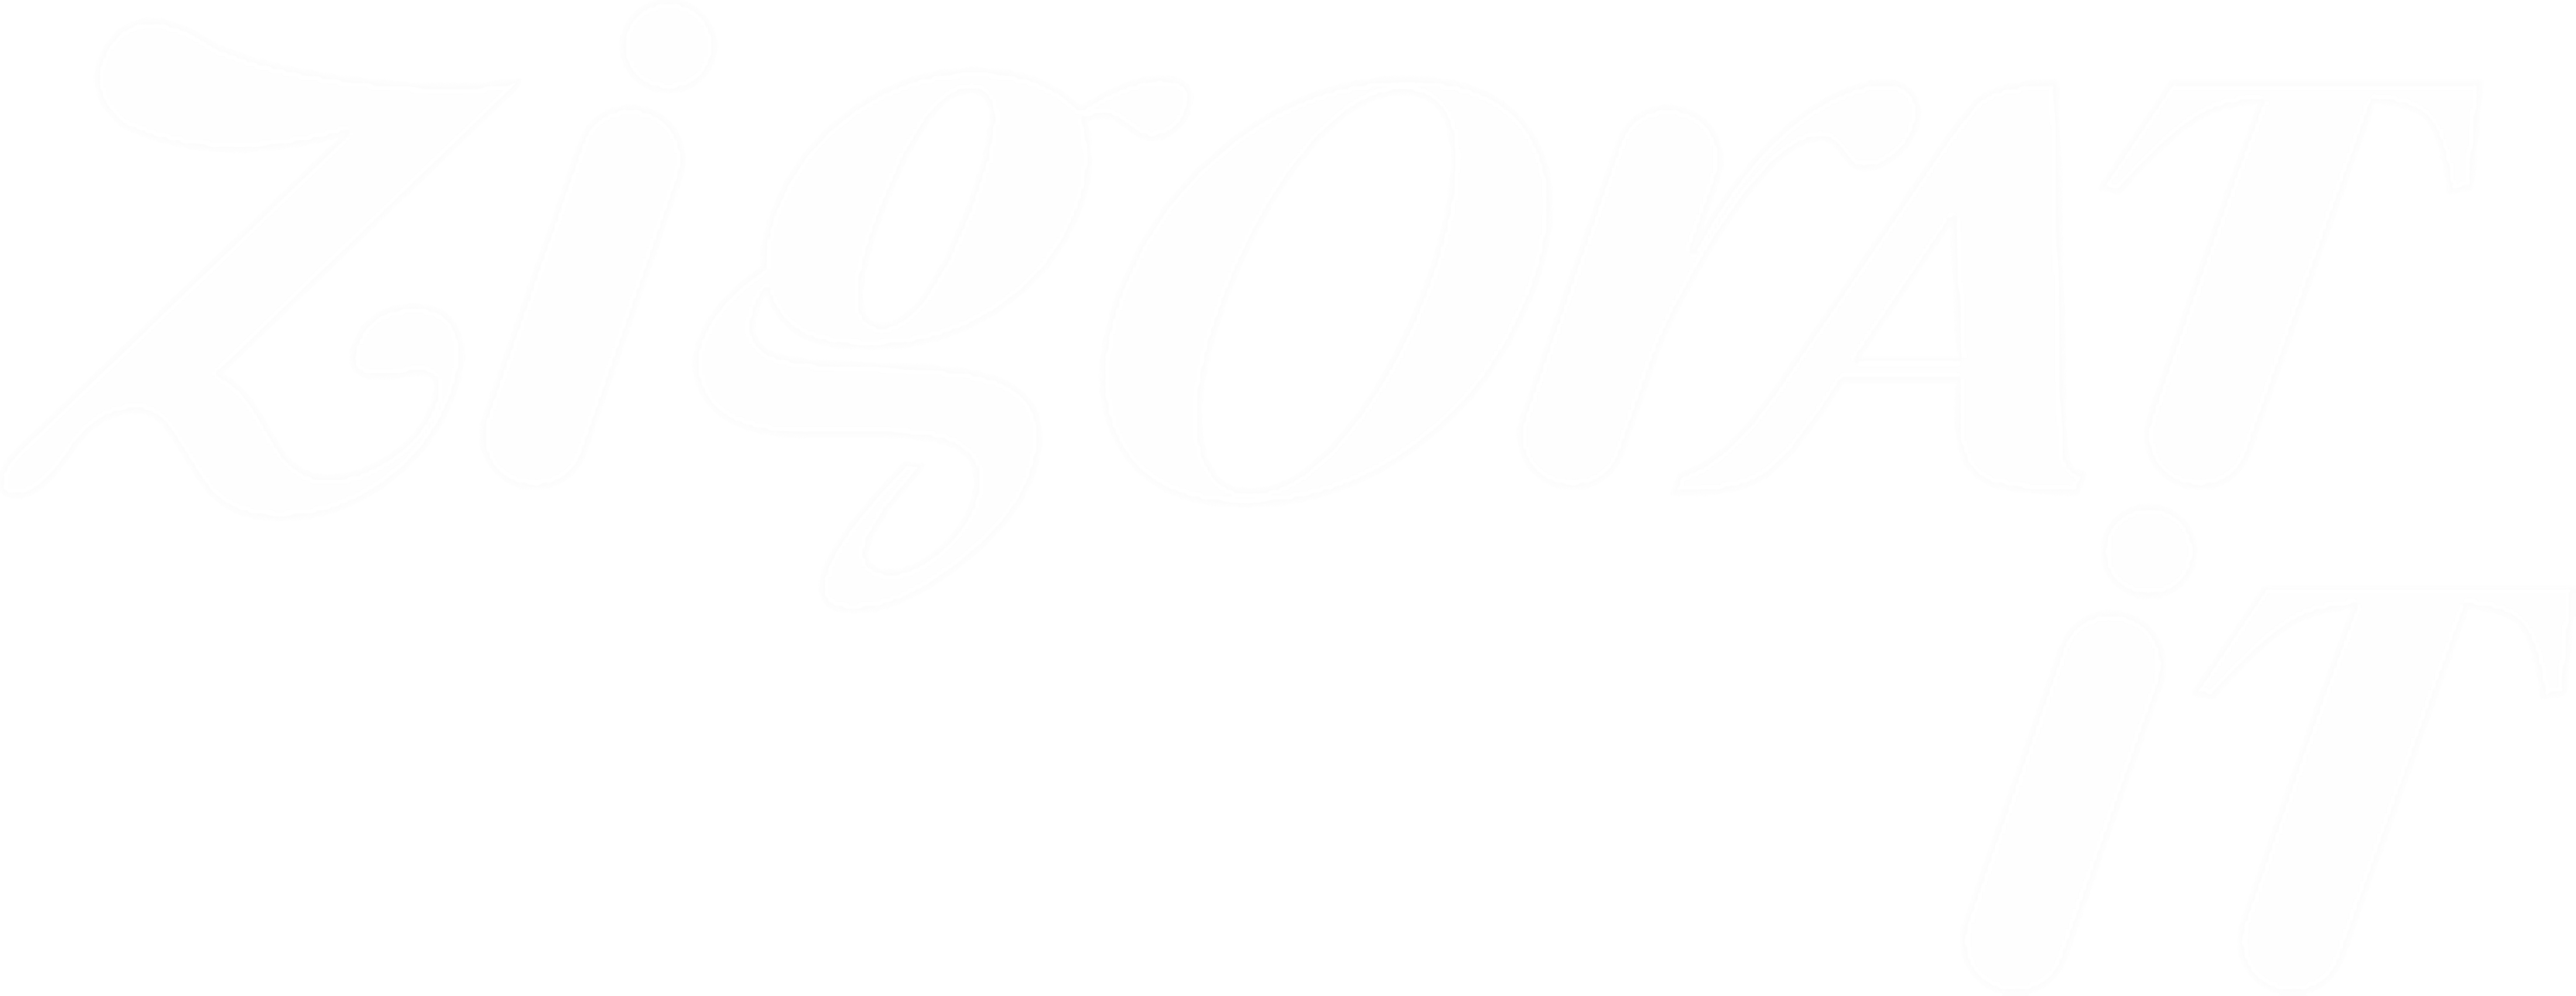 zigorat logo new